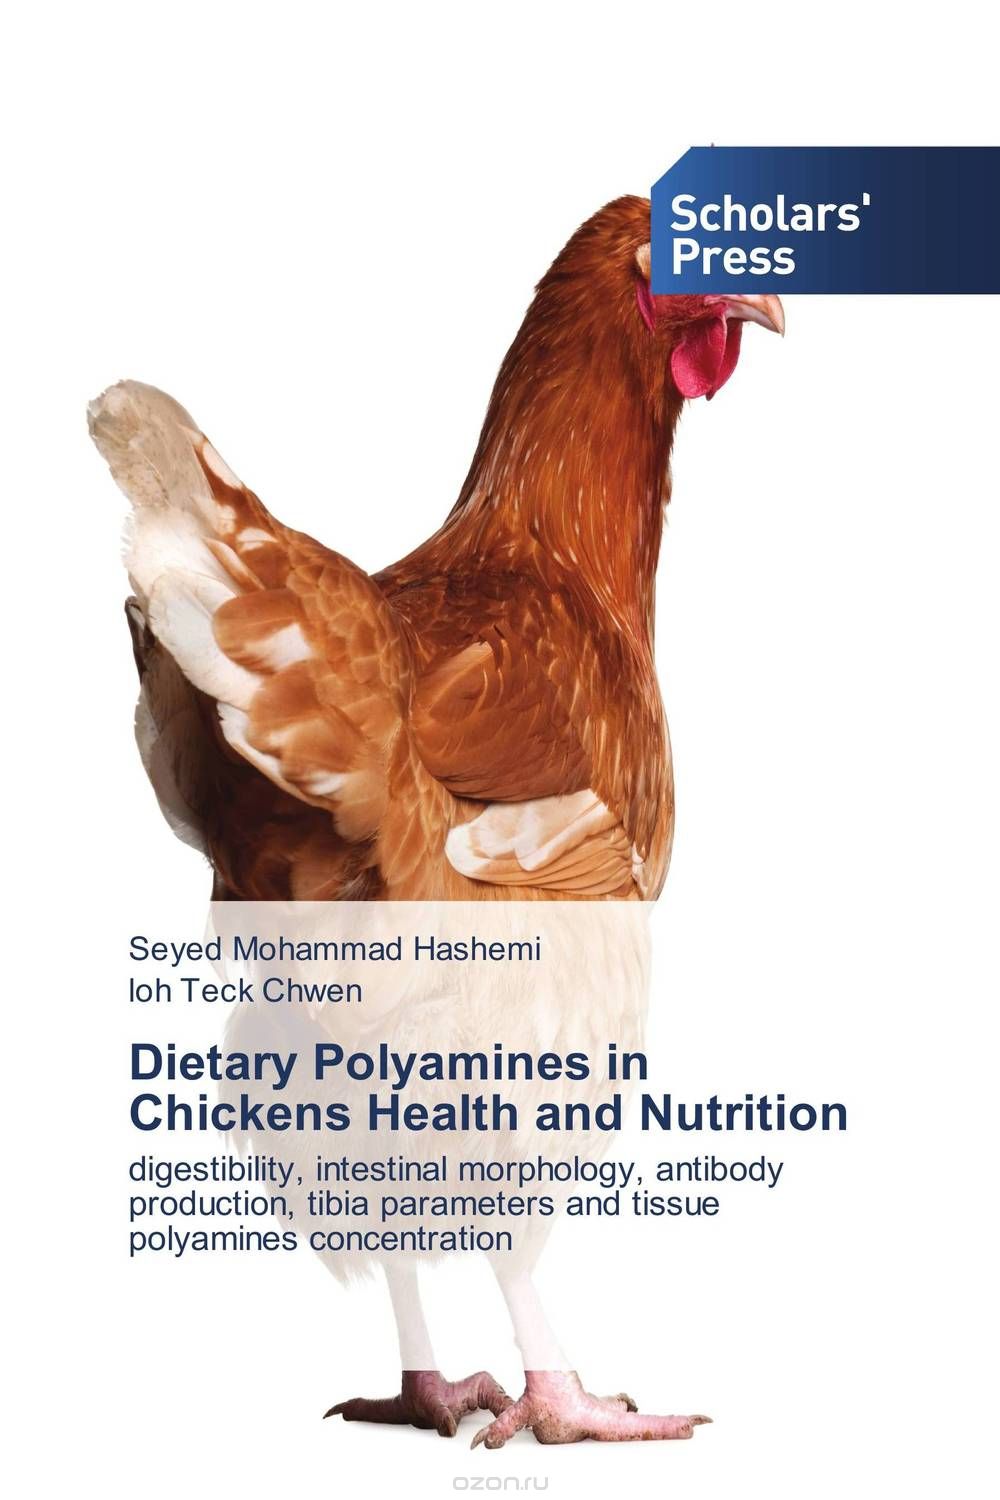 Скачать книгу "Dietary Polyamines in Chickens Health and Nutrition"